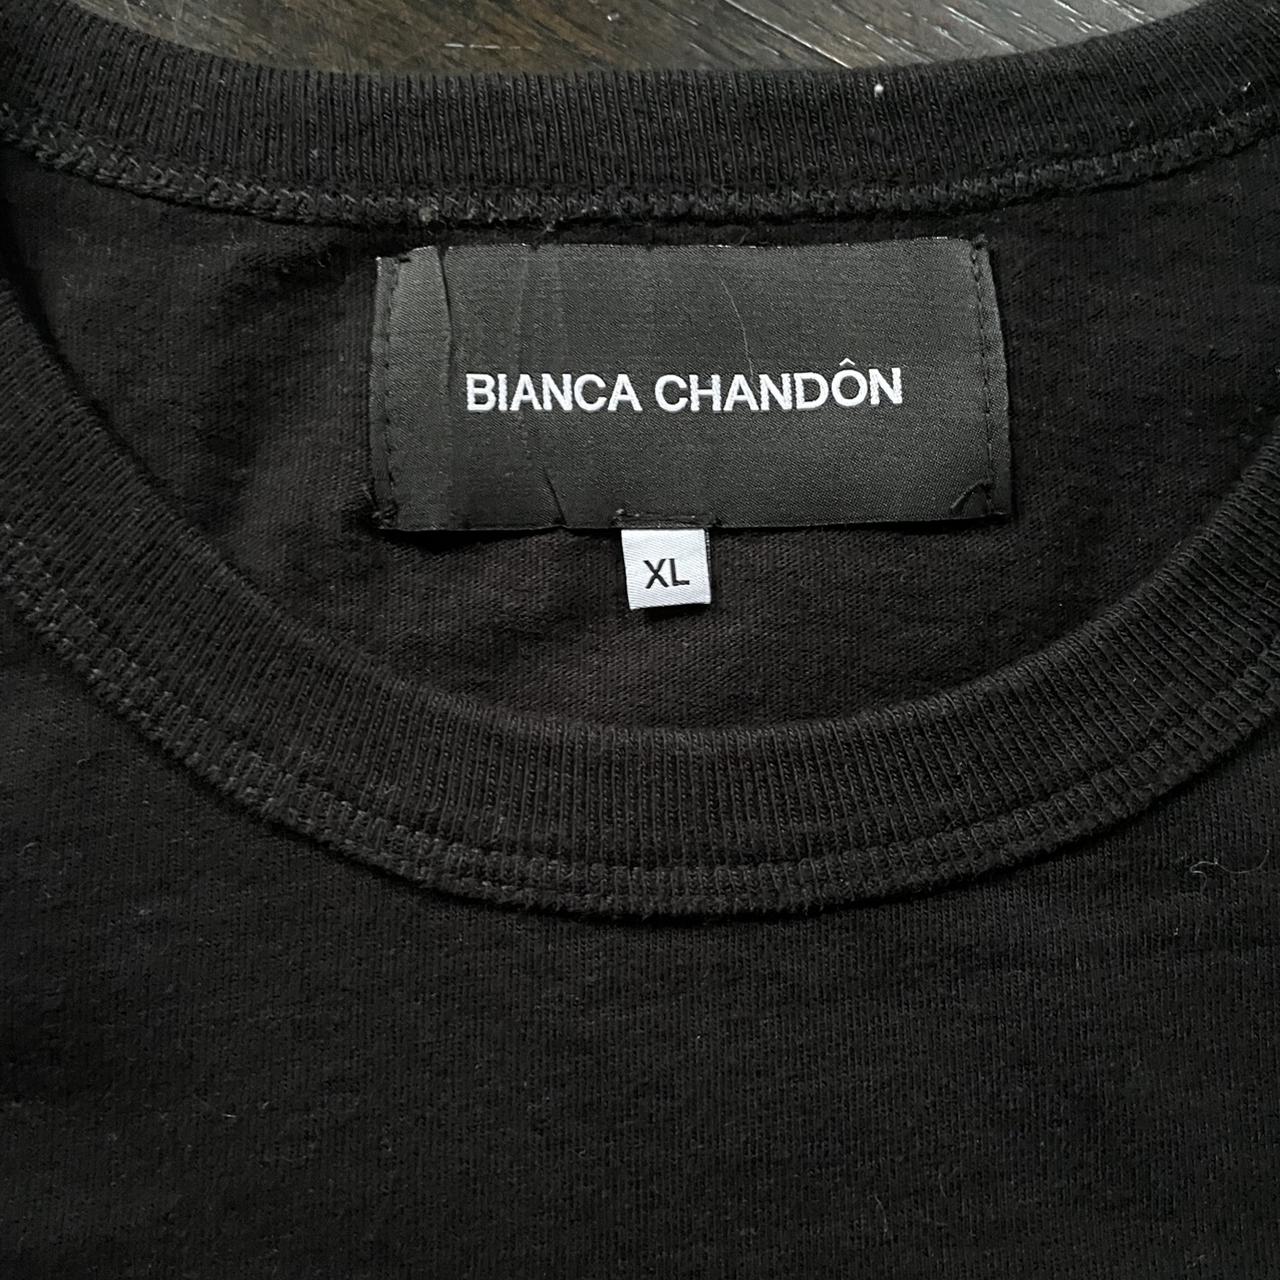 Bianca Chandon Men's Black T-shirt (3)